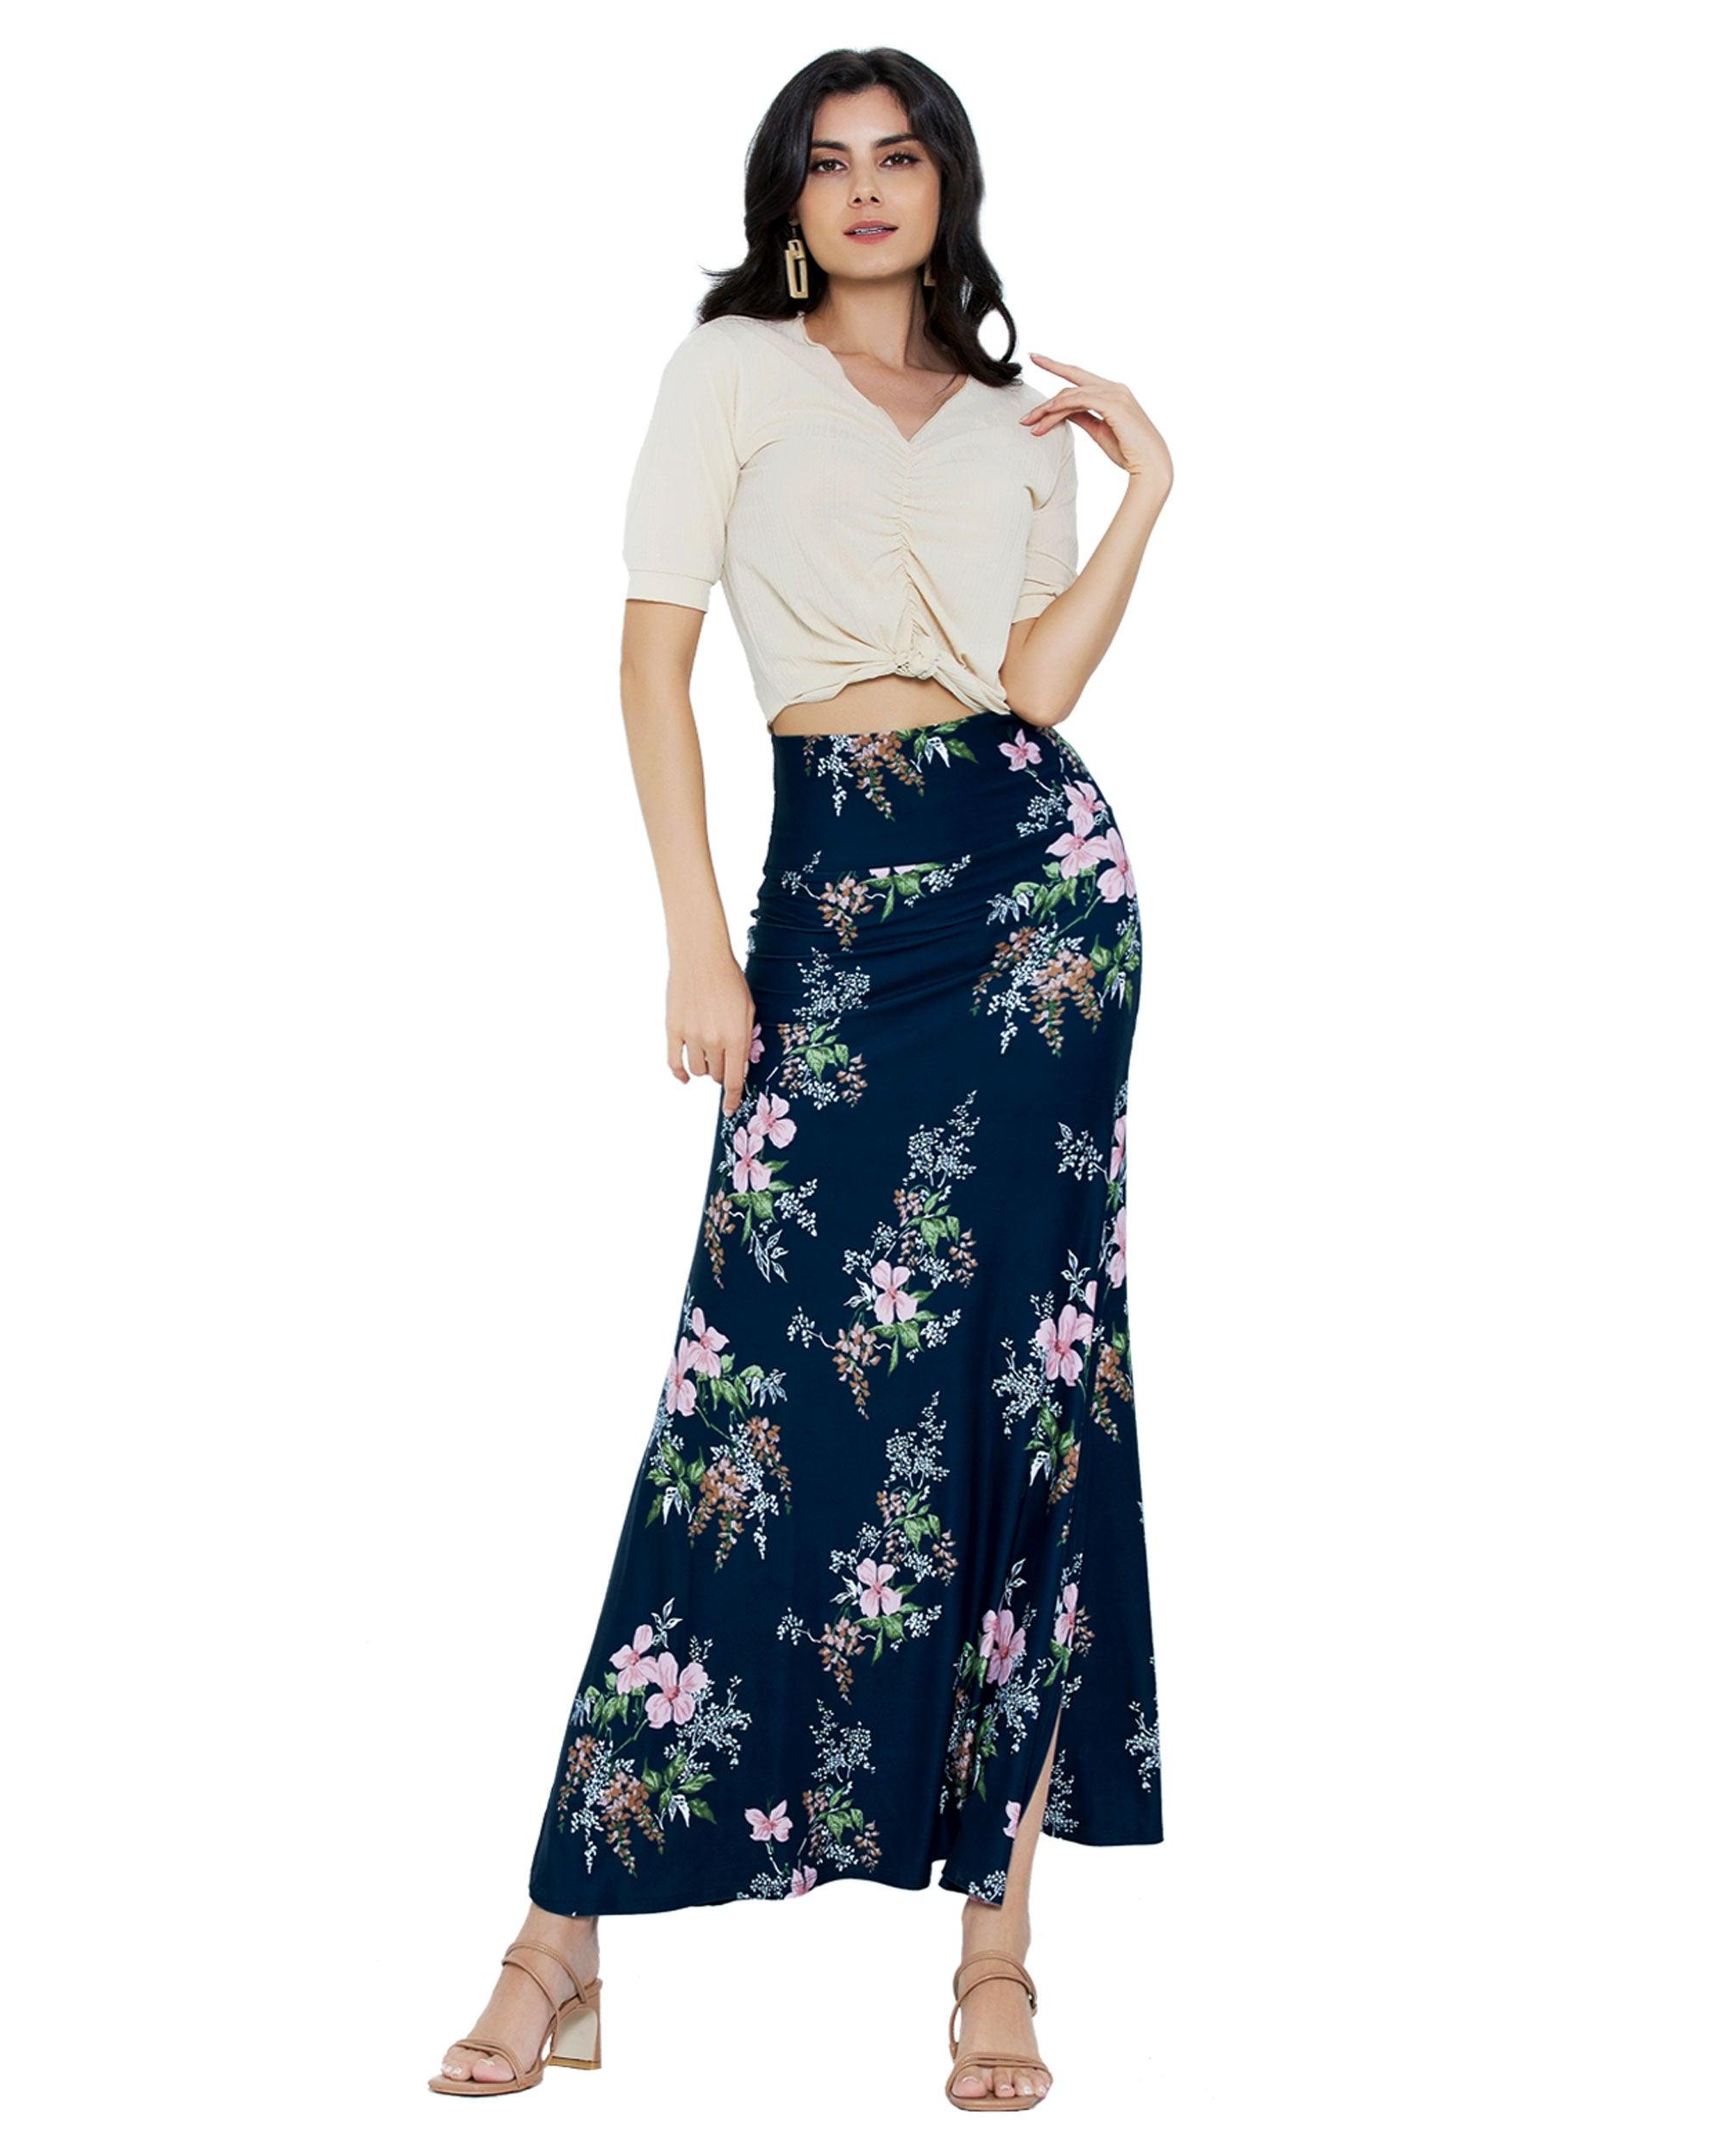 Flower Maxi Skirt - Floral Elegance